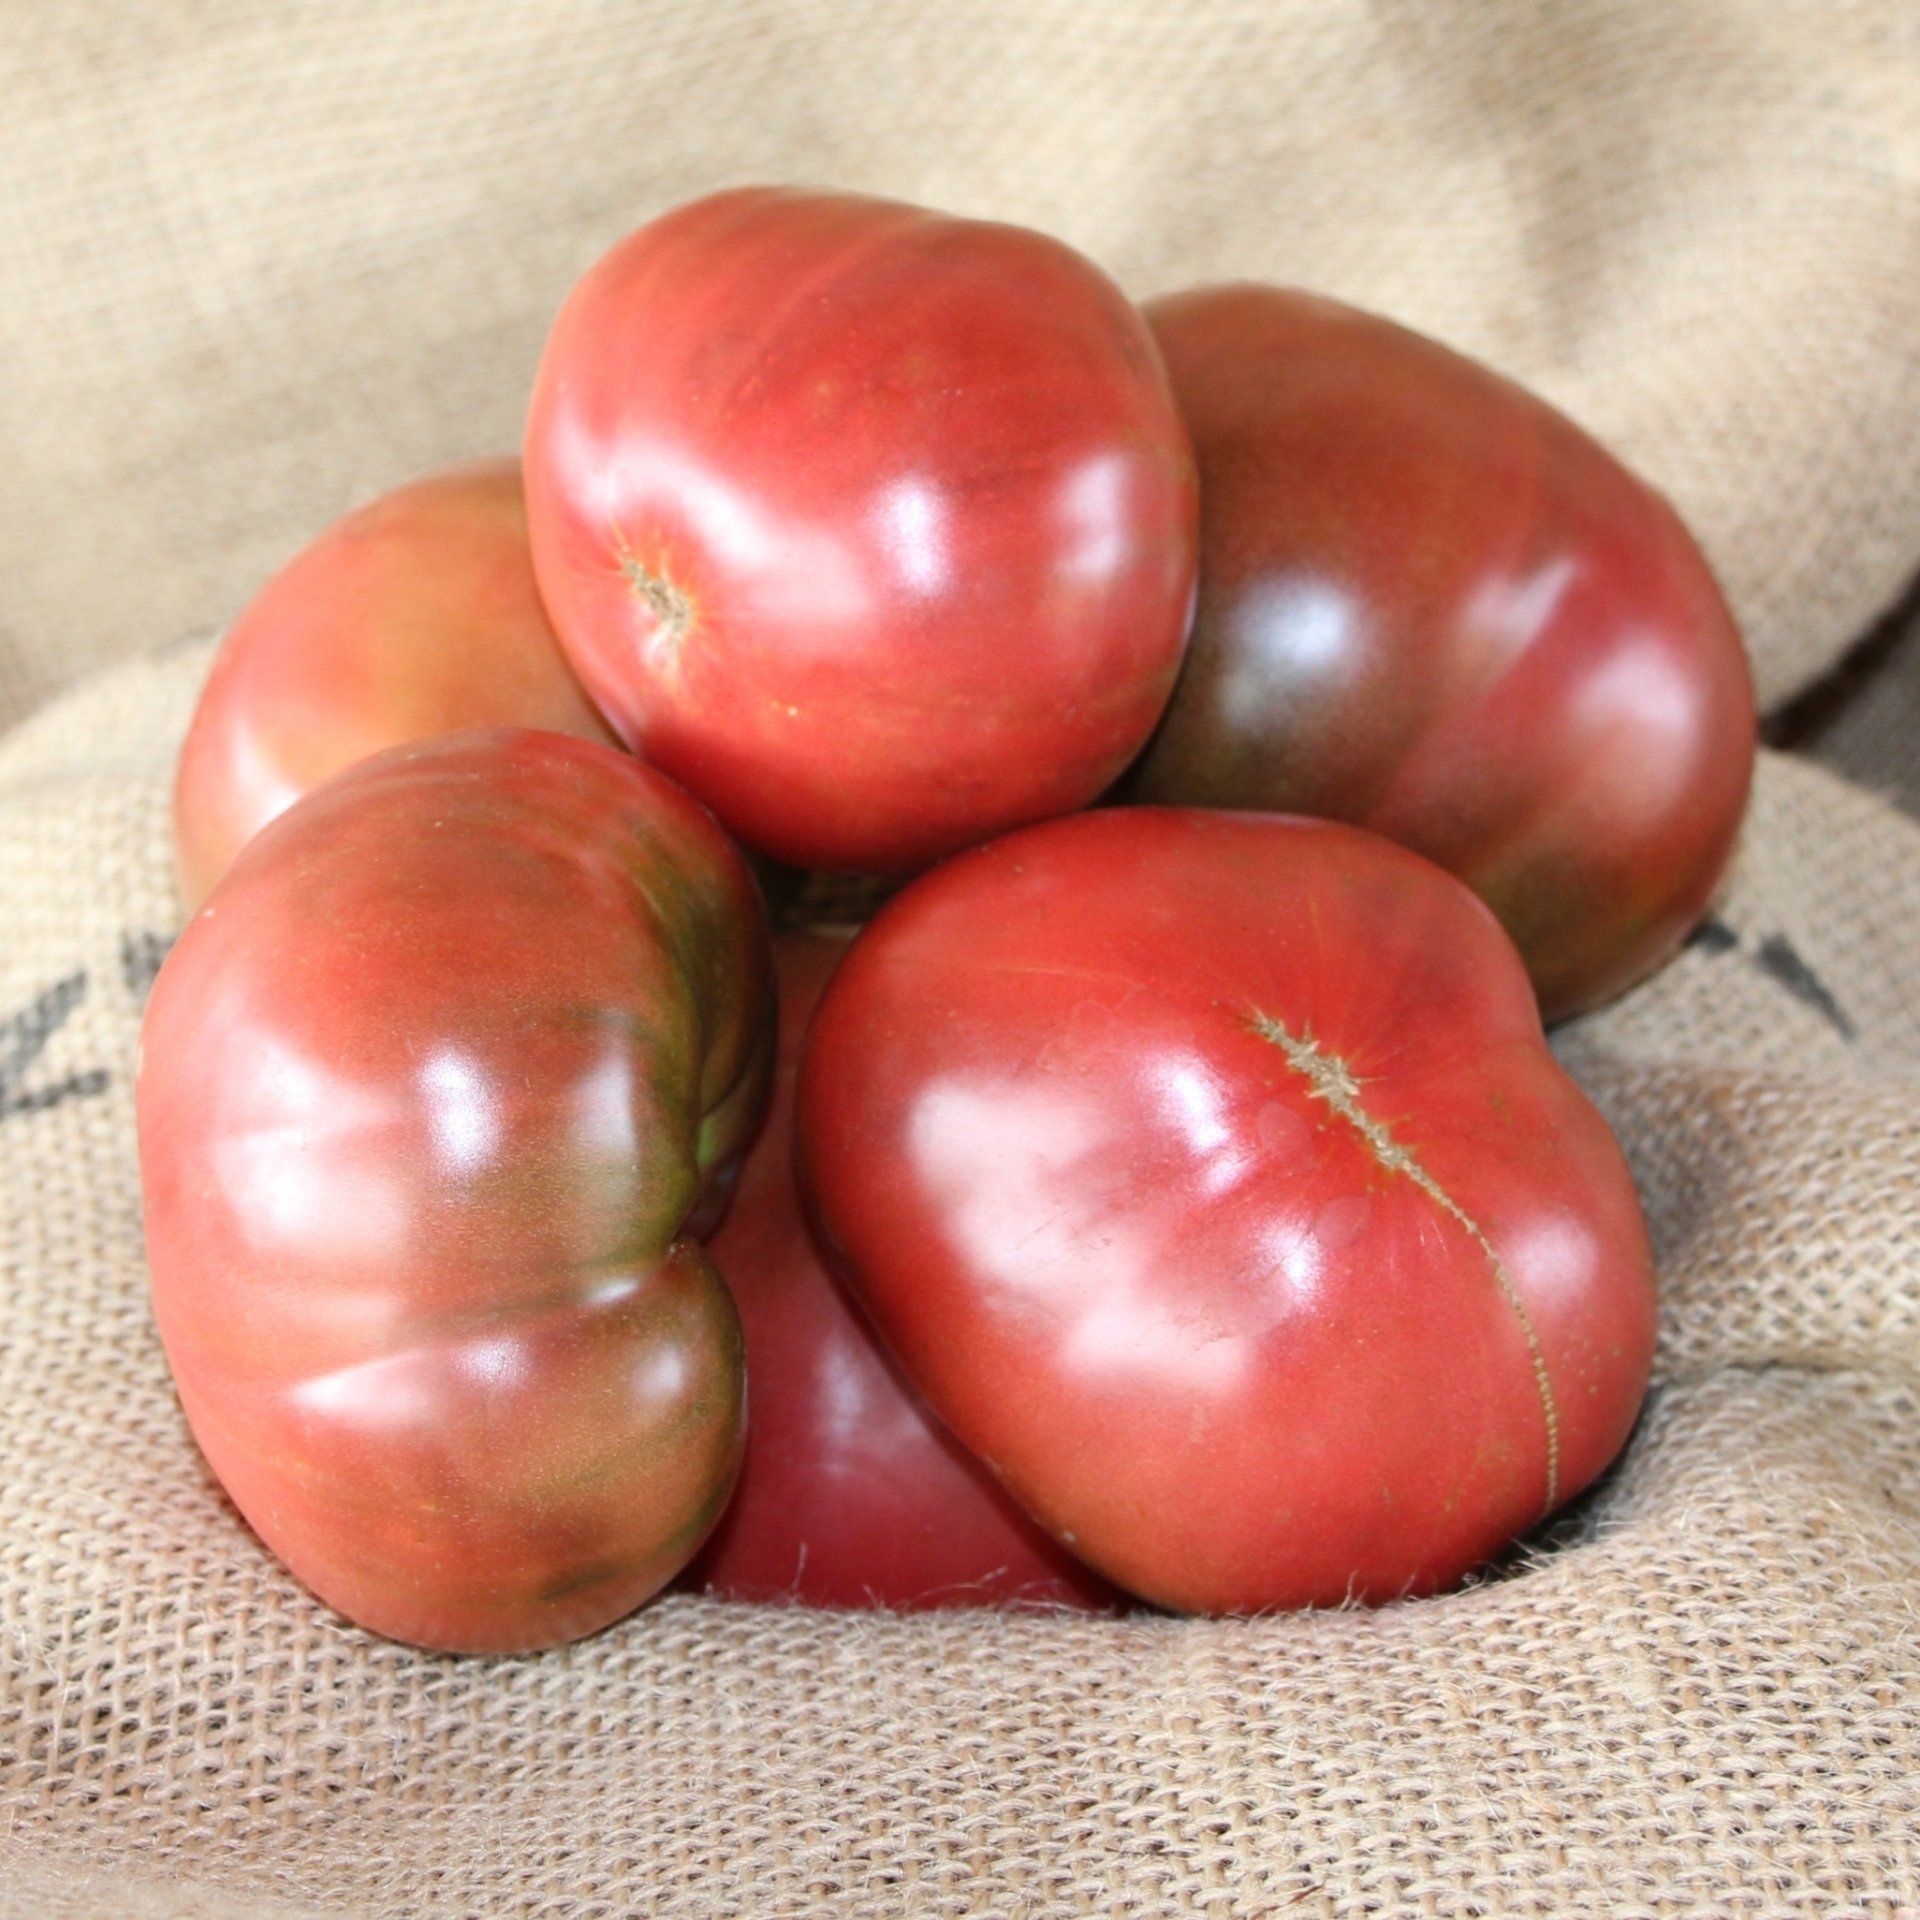 locally grown purple tomatoes